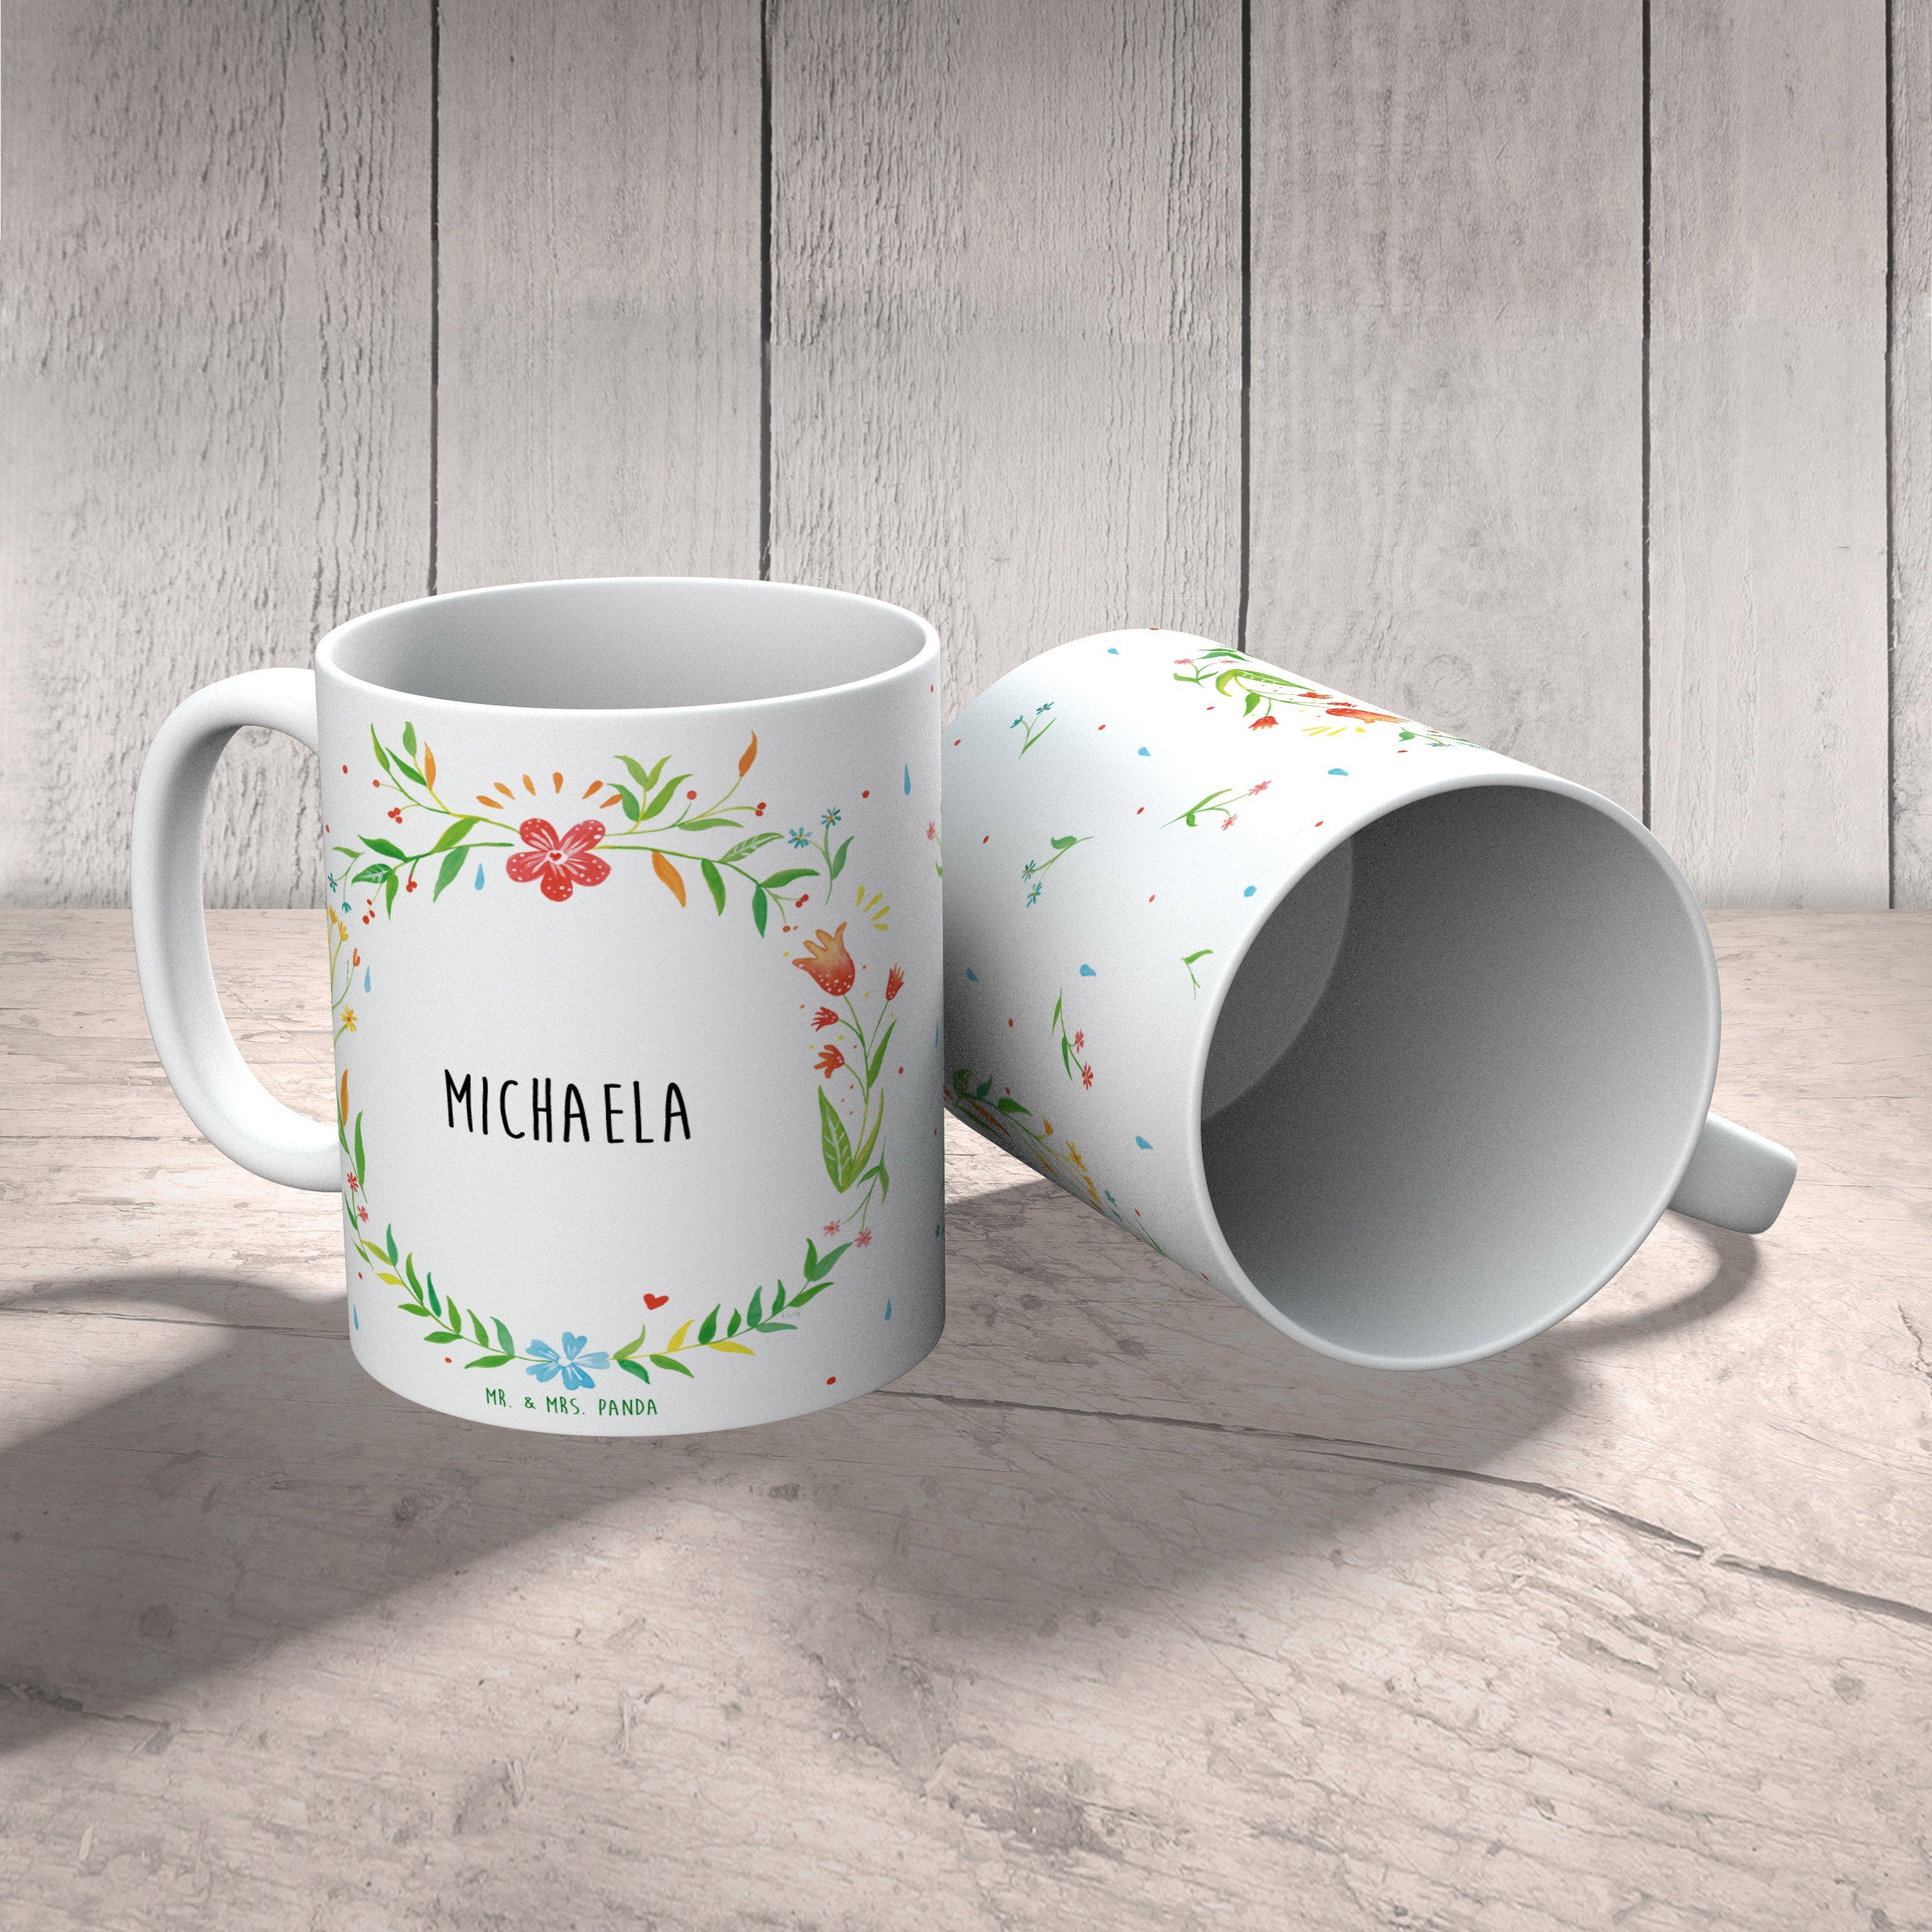 Mr. & Mrs. Panda Tasse Kaffeetasse, Michaela Sprüche, Geschenk, Keramiktasse, Gesche, - Tasse Keramik